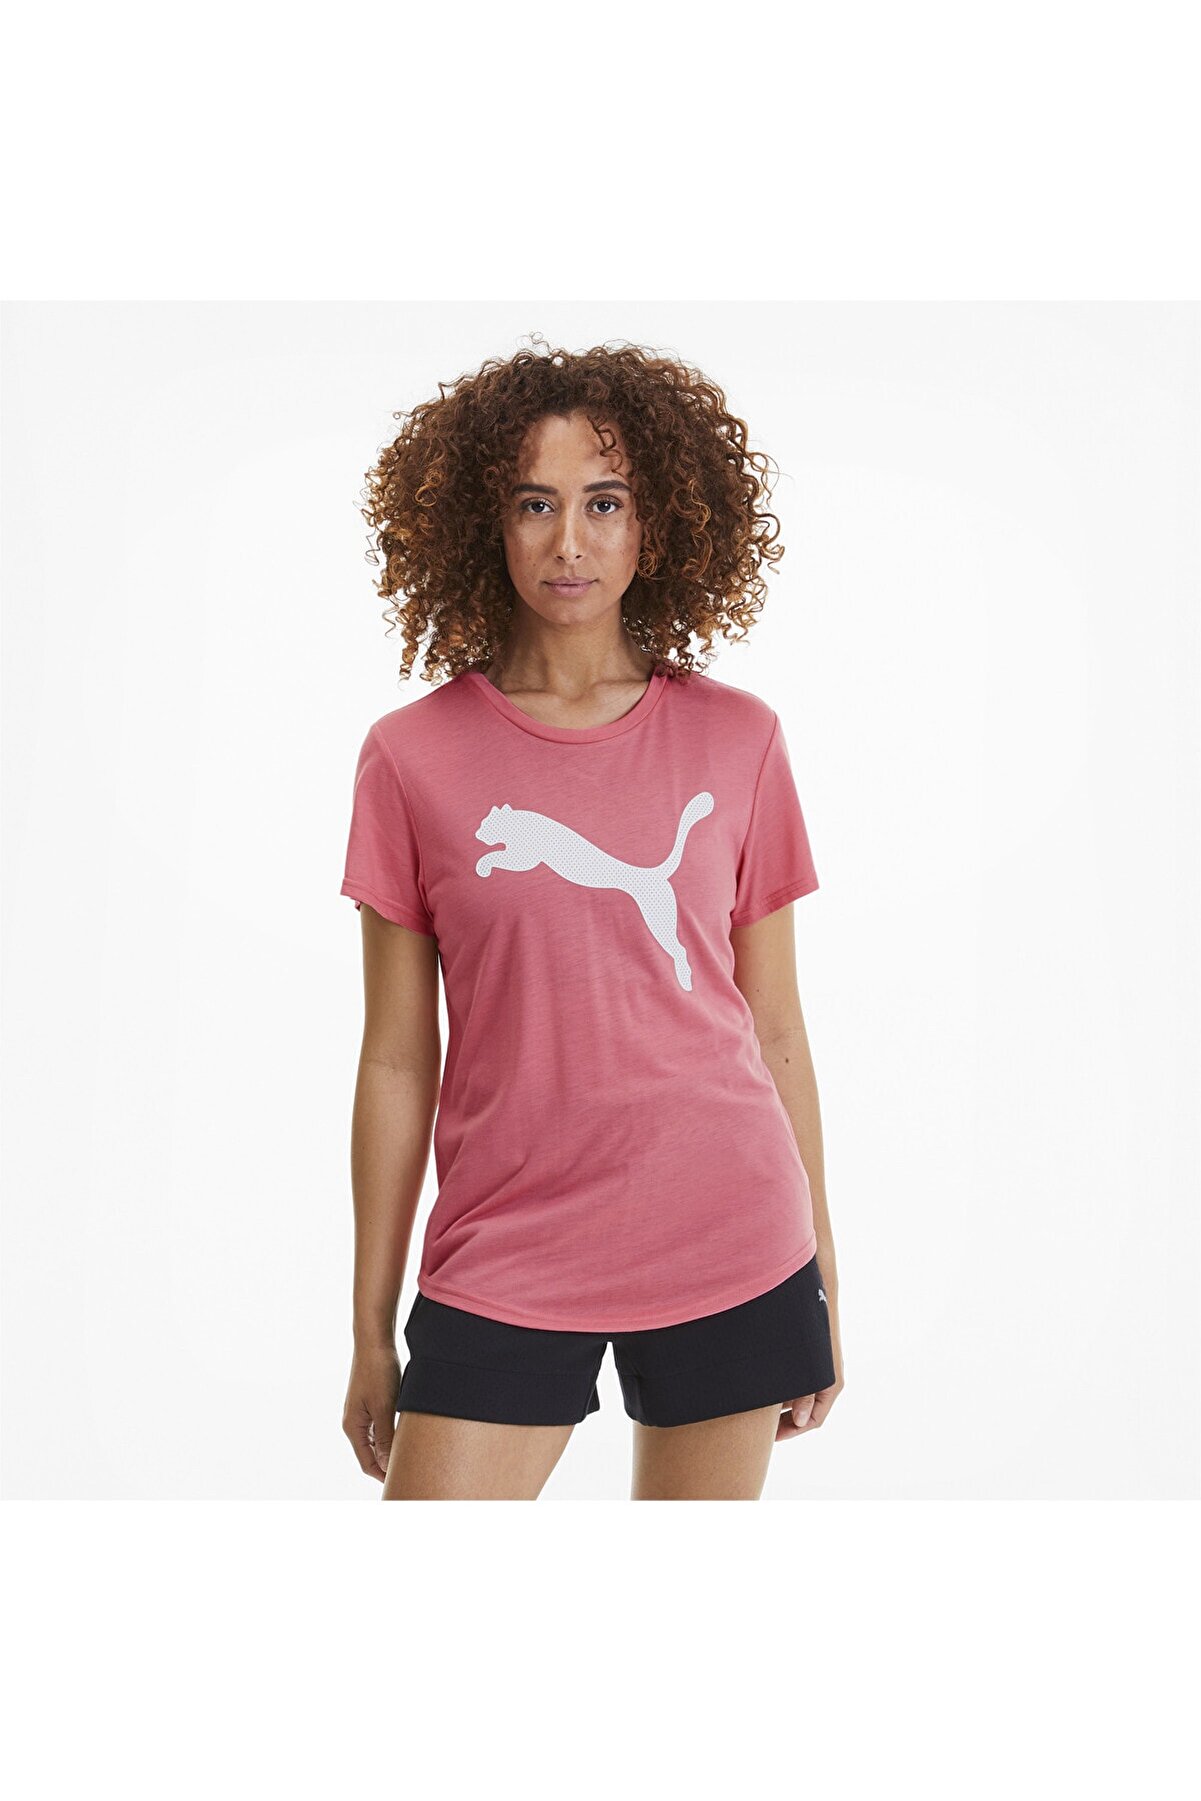 Puma Kadın Spor T-Shirt - EVOSTRIPE - 58124114